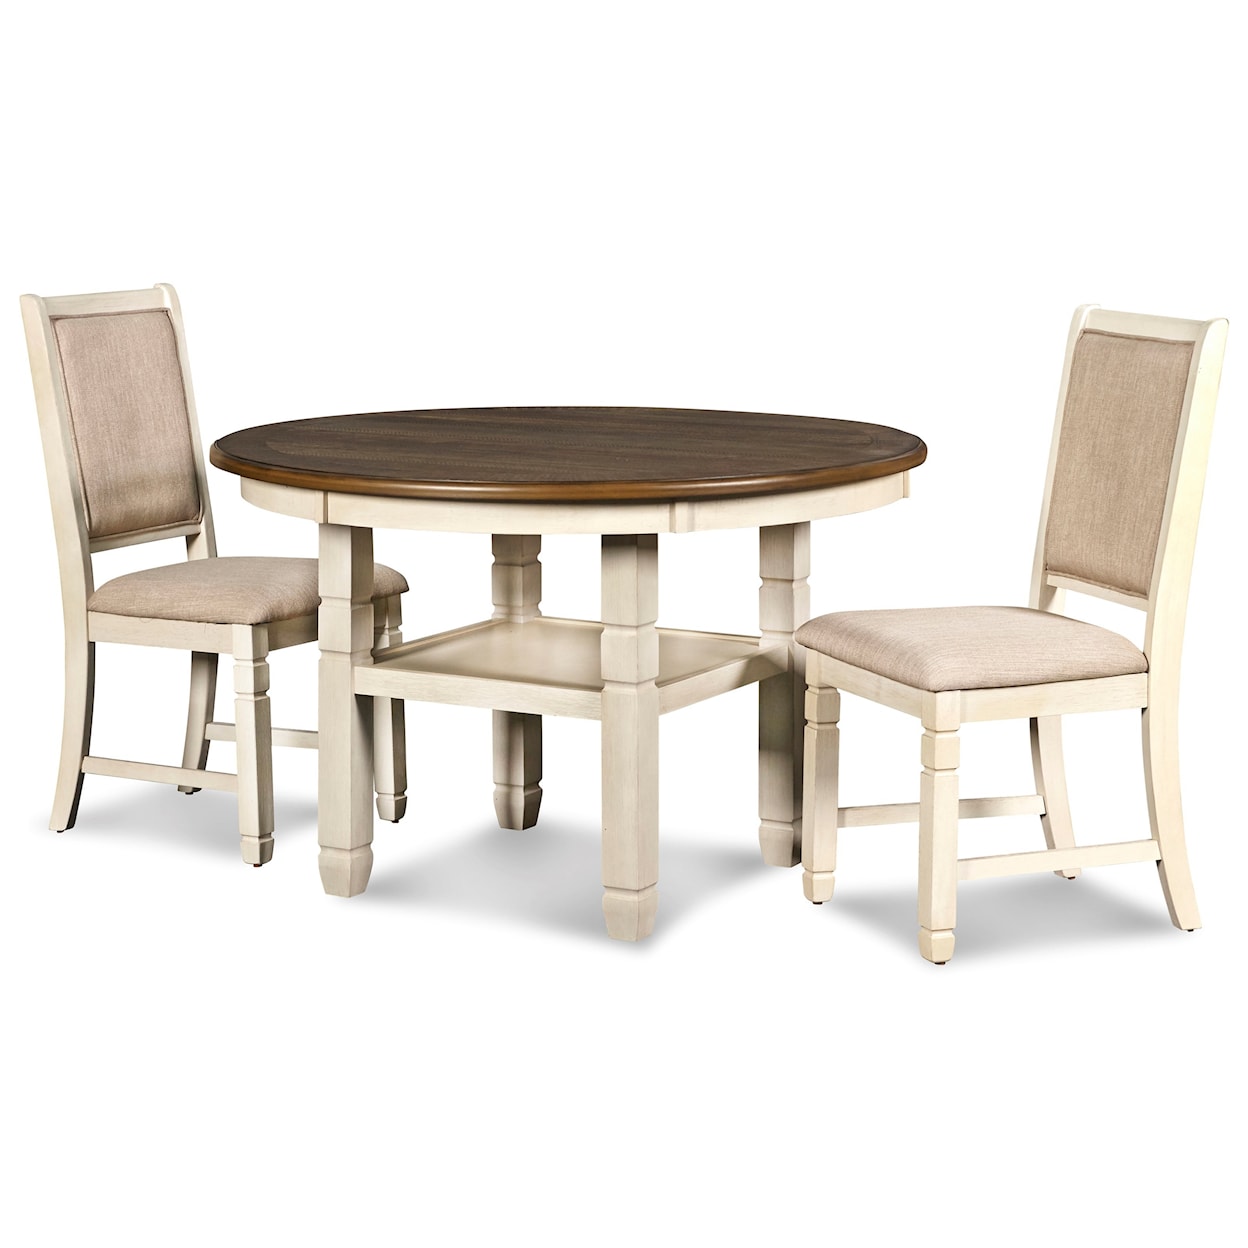 New Classic Prairie Point 3-Piece Table & Chair Set